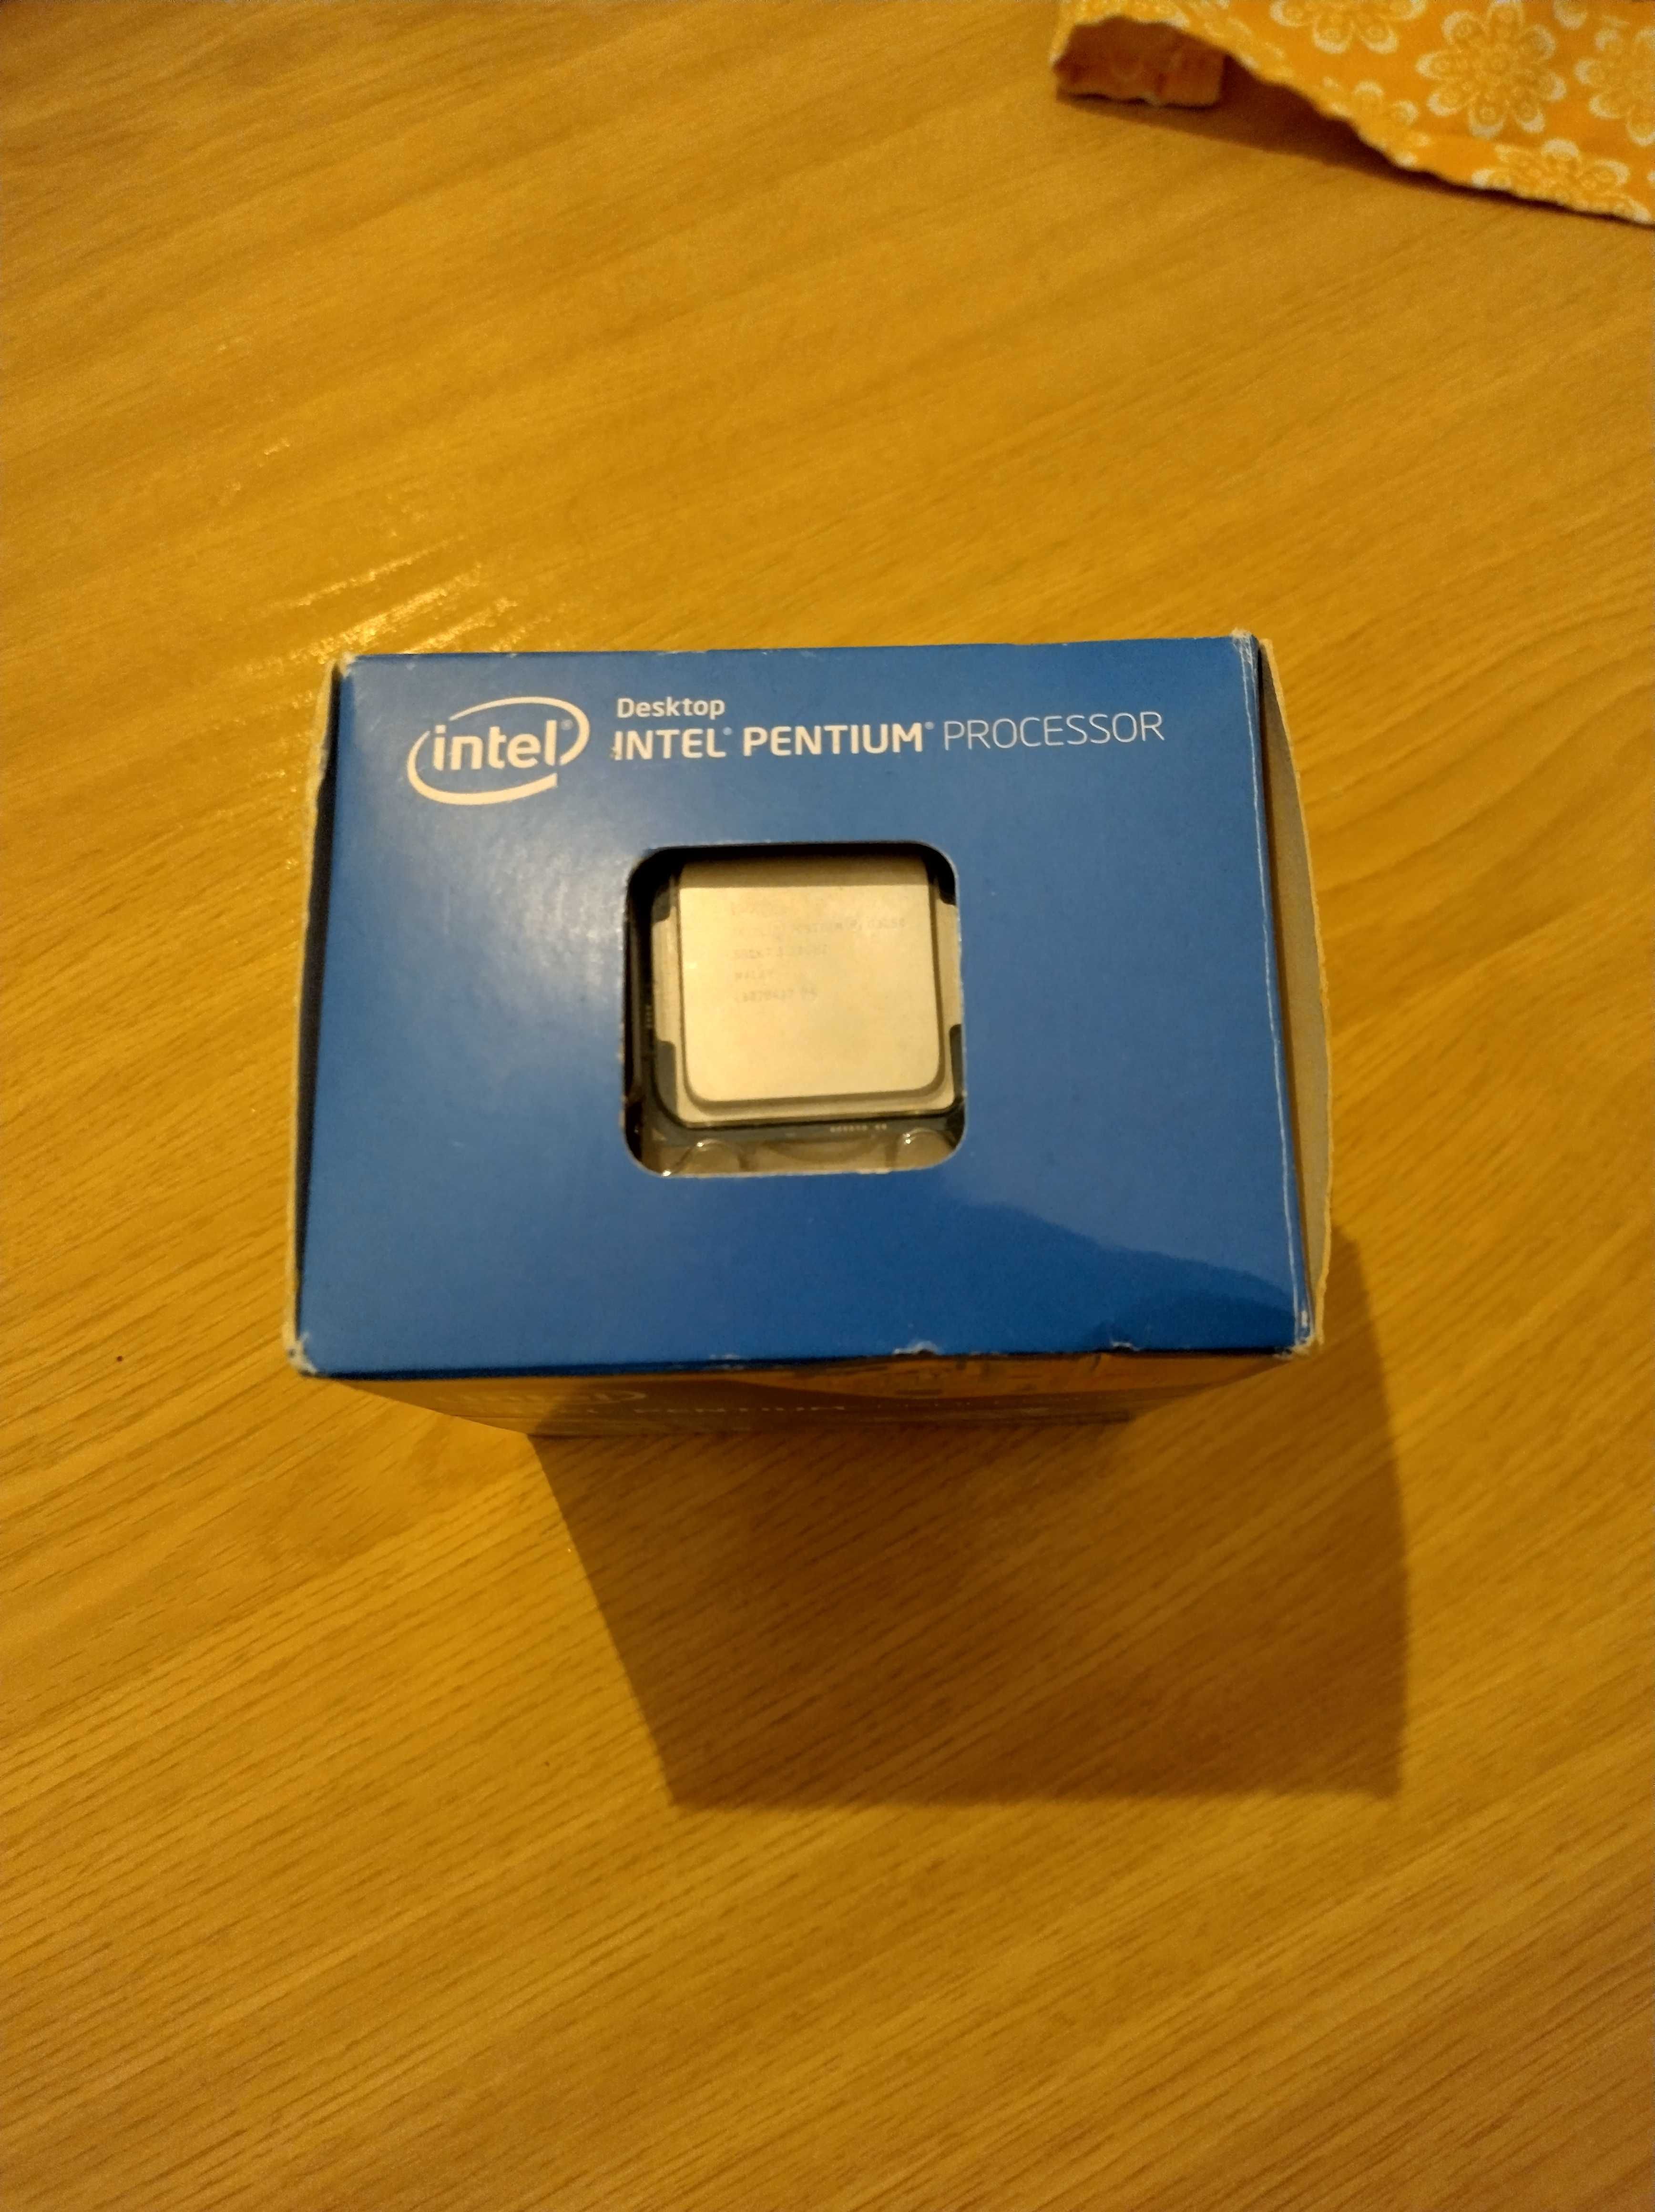 Processador Intel Pentium G3250